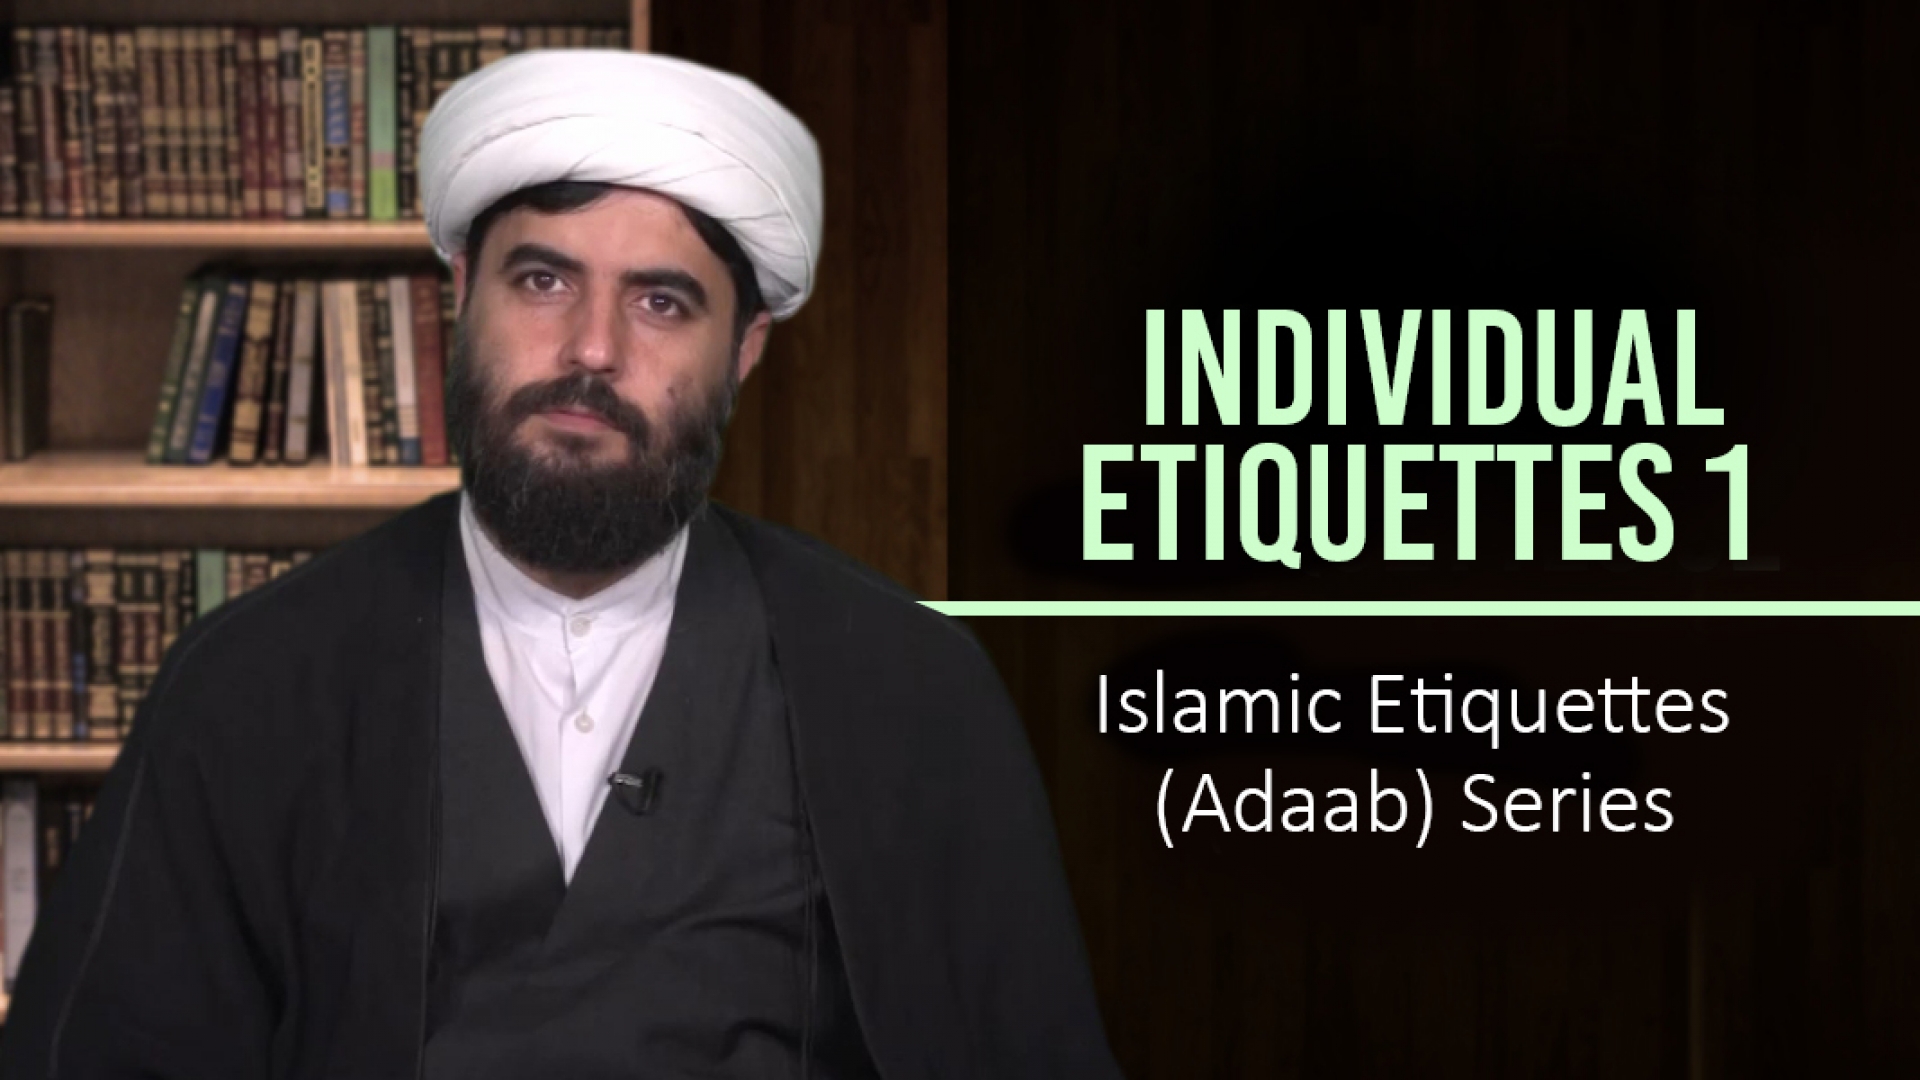 Individual Etiquettes 1 | Islamic Etiquettes (Adaab) Series | Farsi sub English